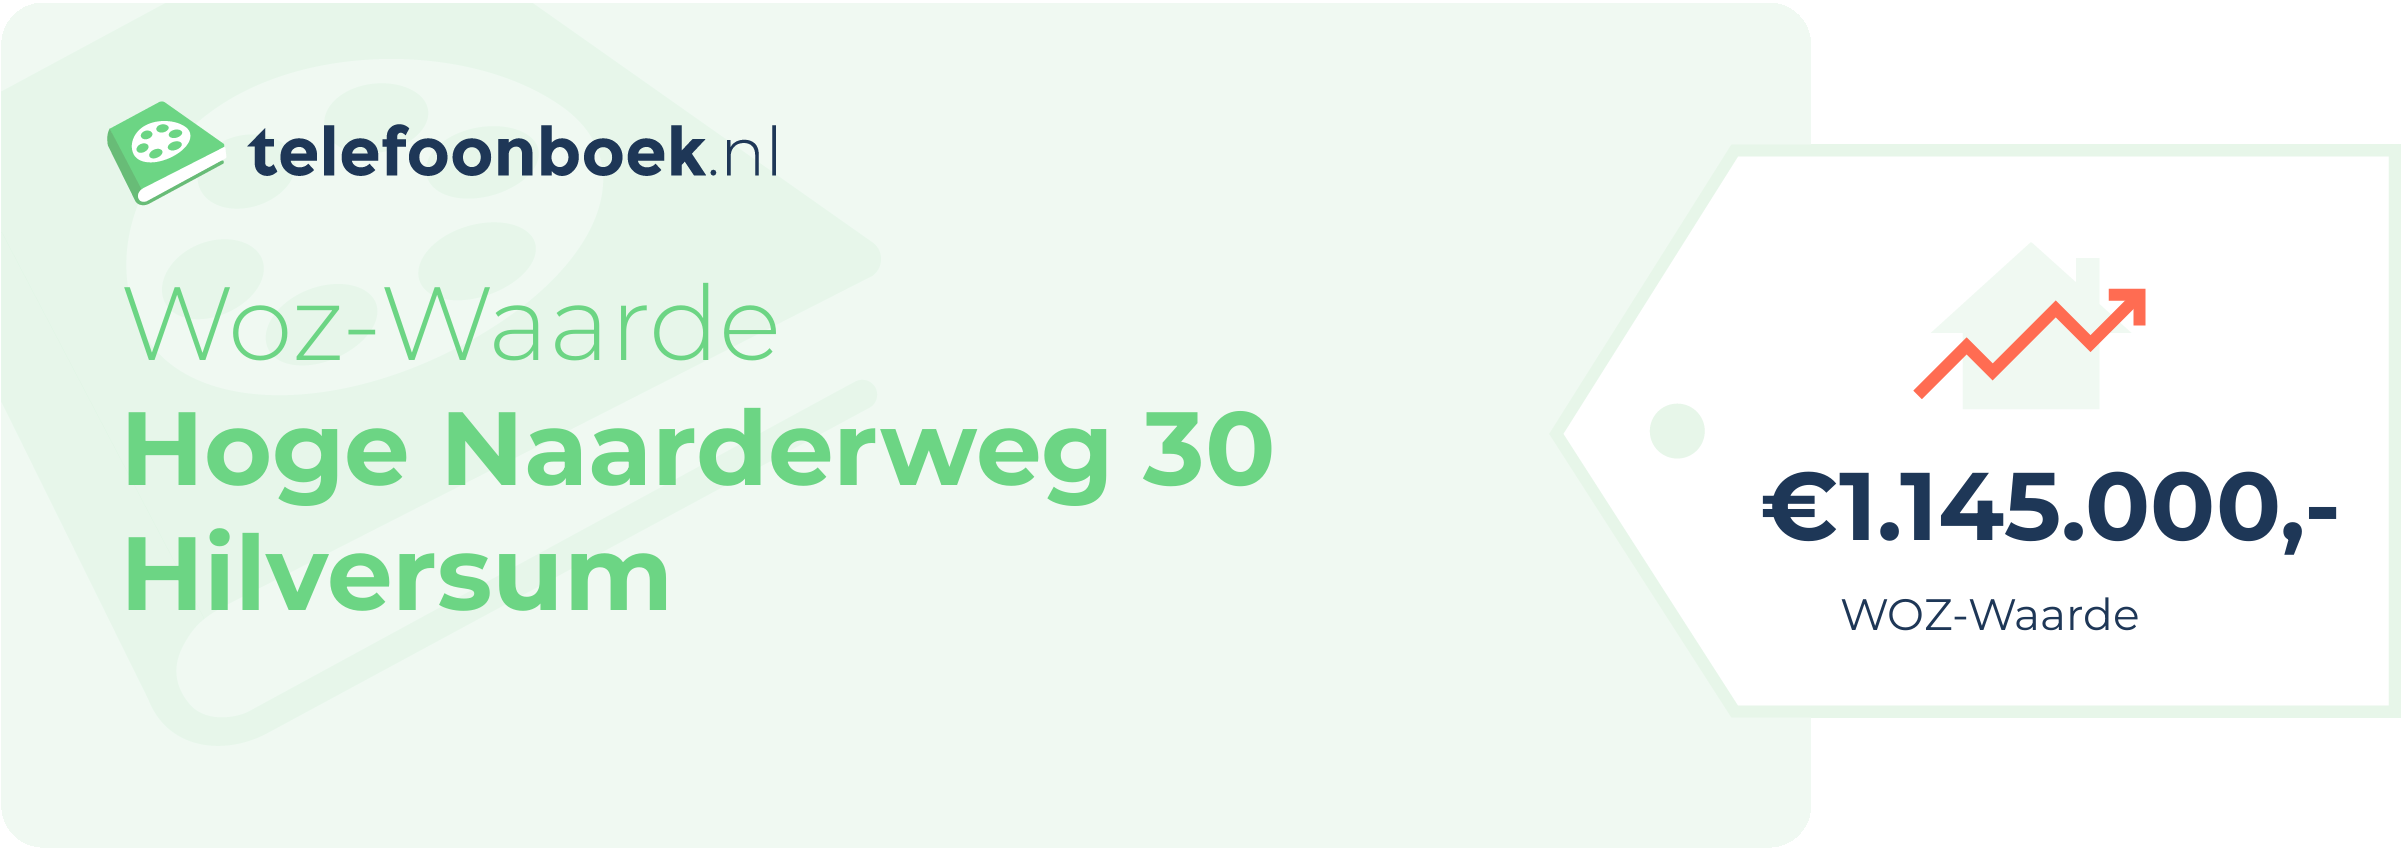 WOZ-waarde Hoge Naarderweg 30 Hilversum